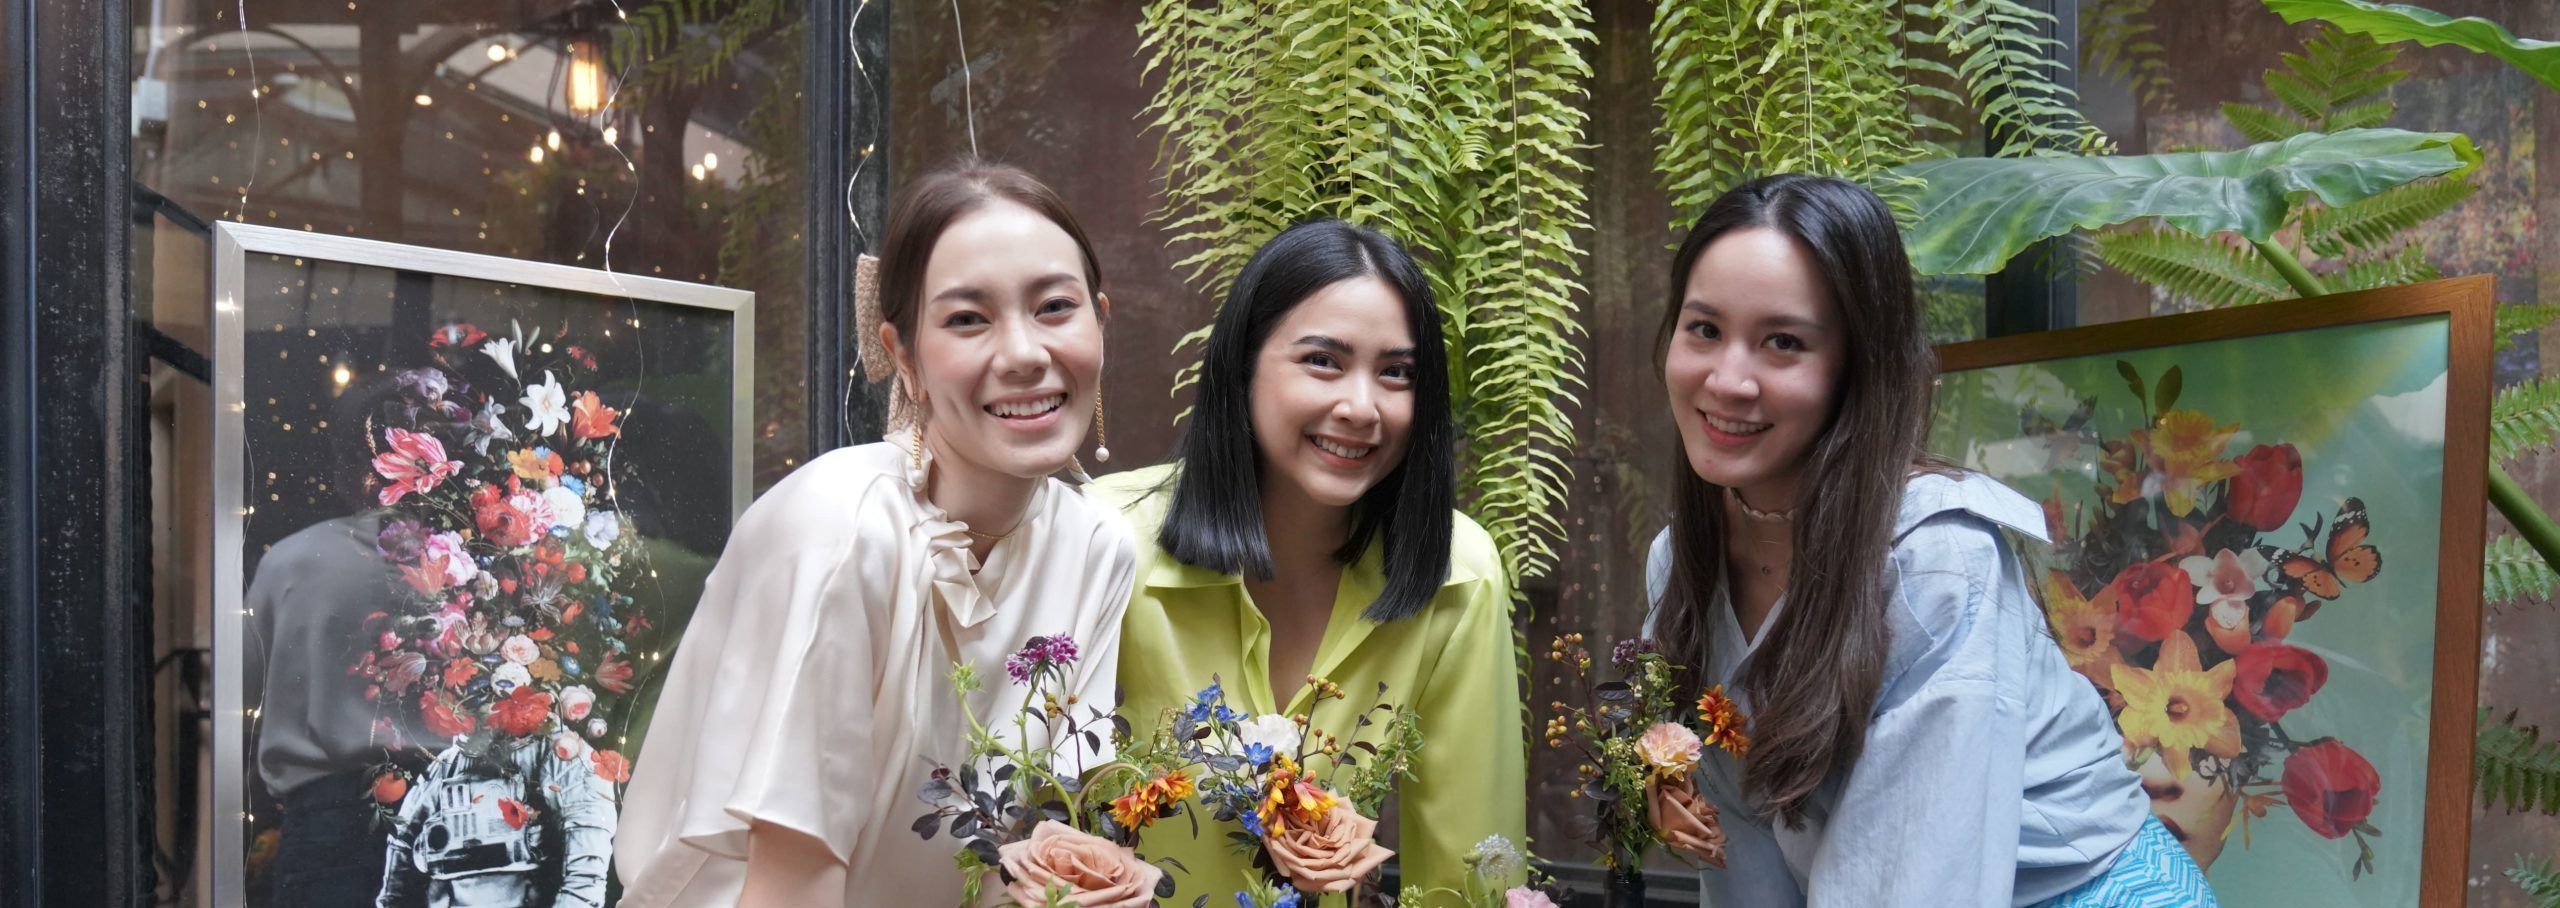 Explore How Lifestyle Asia Thailand Promotes Sustainability for Highland Park